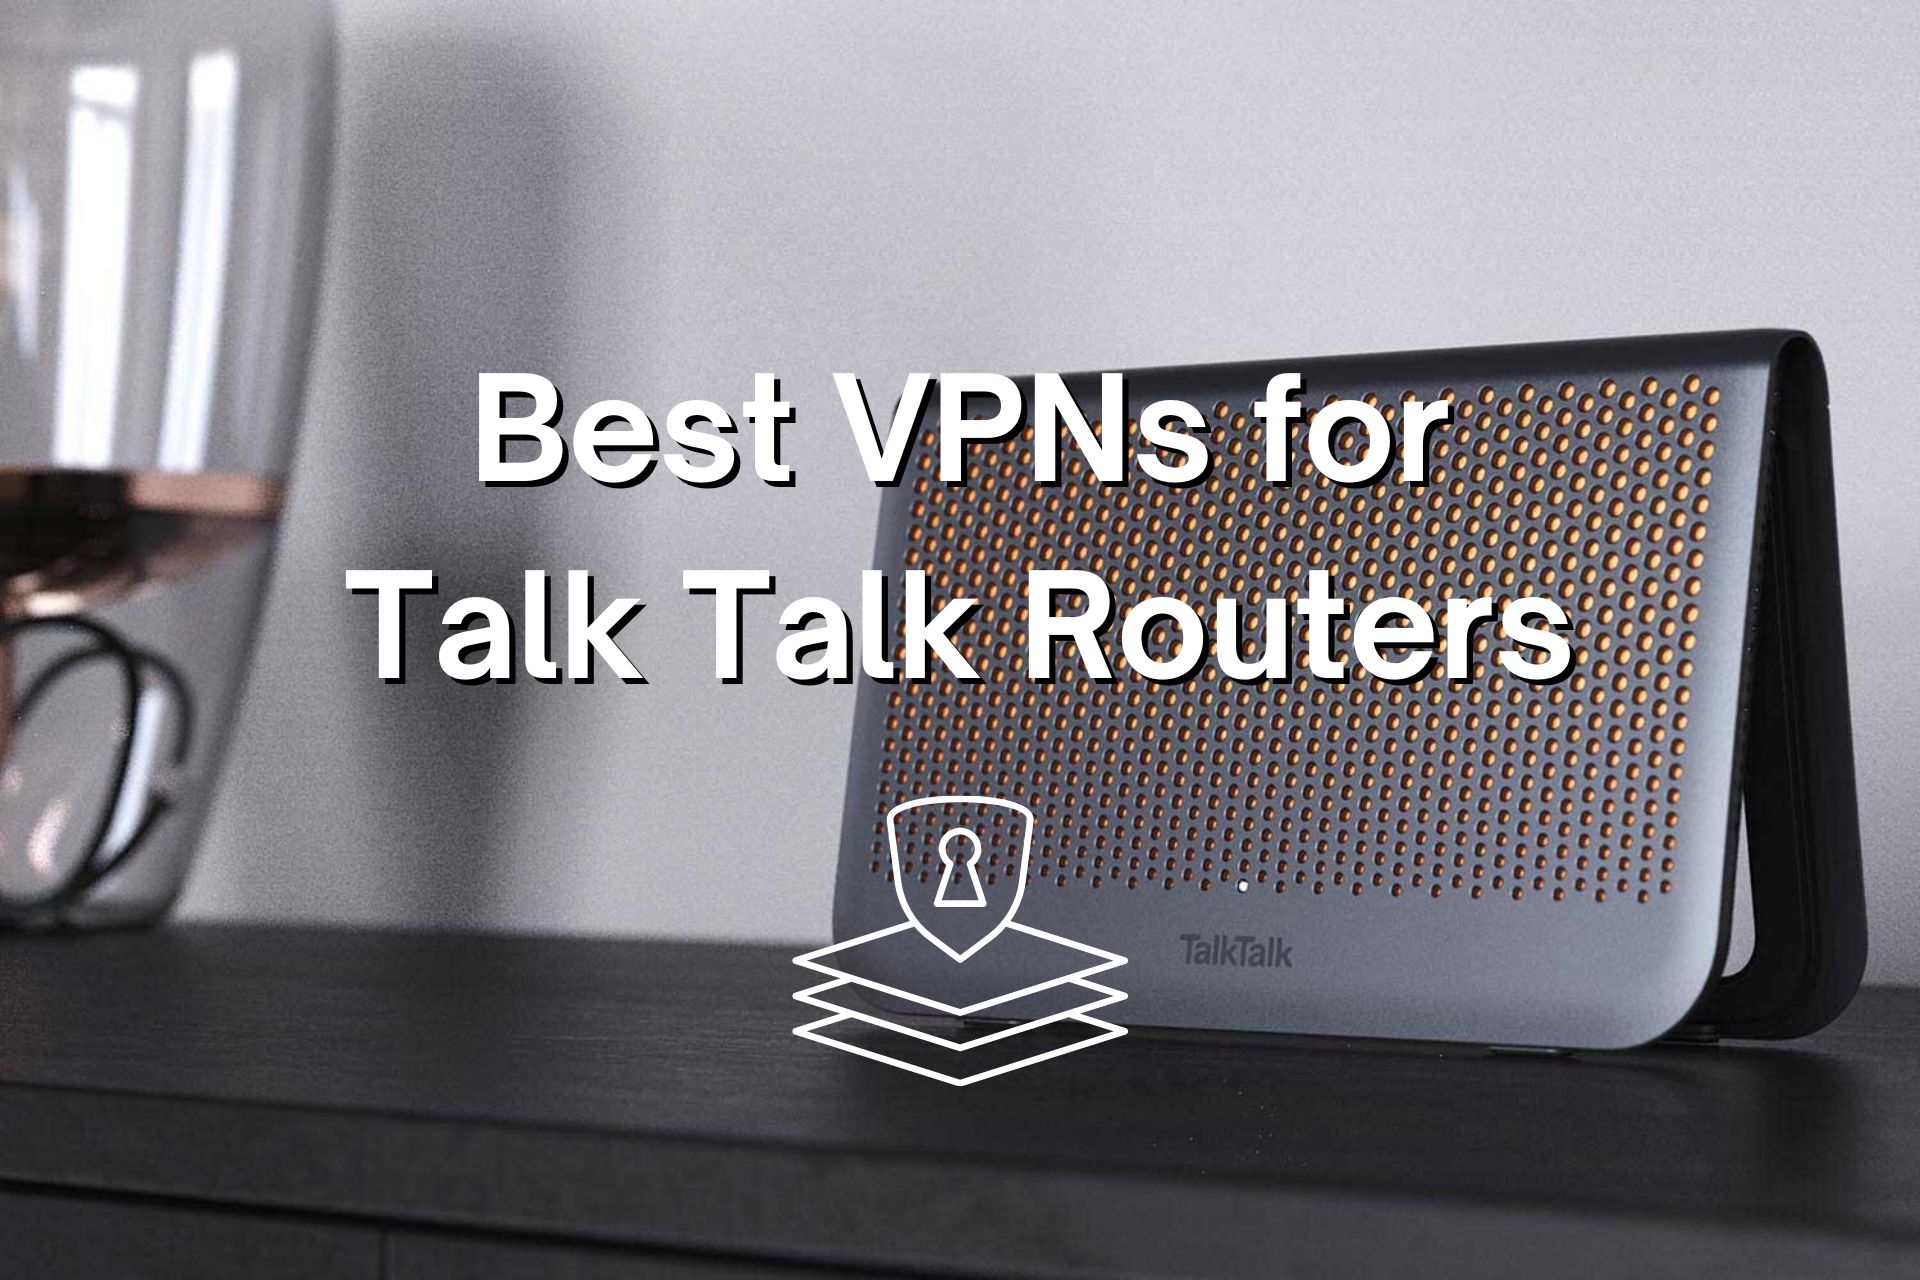 7 Best VPNs For TalkTalk Router – Fast Speed, No Throttle & More